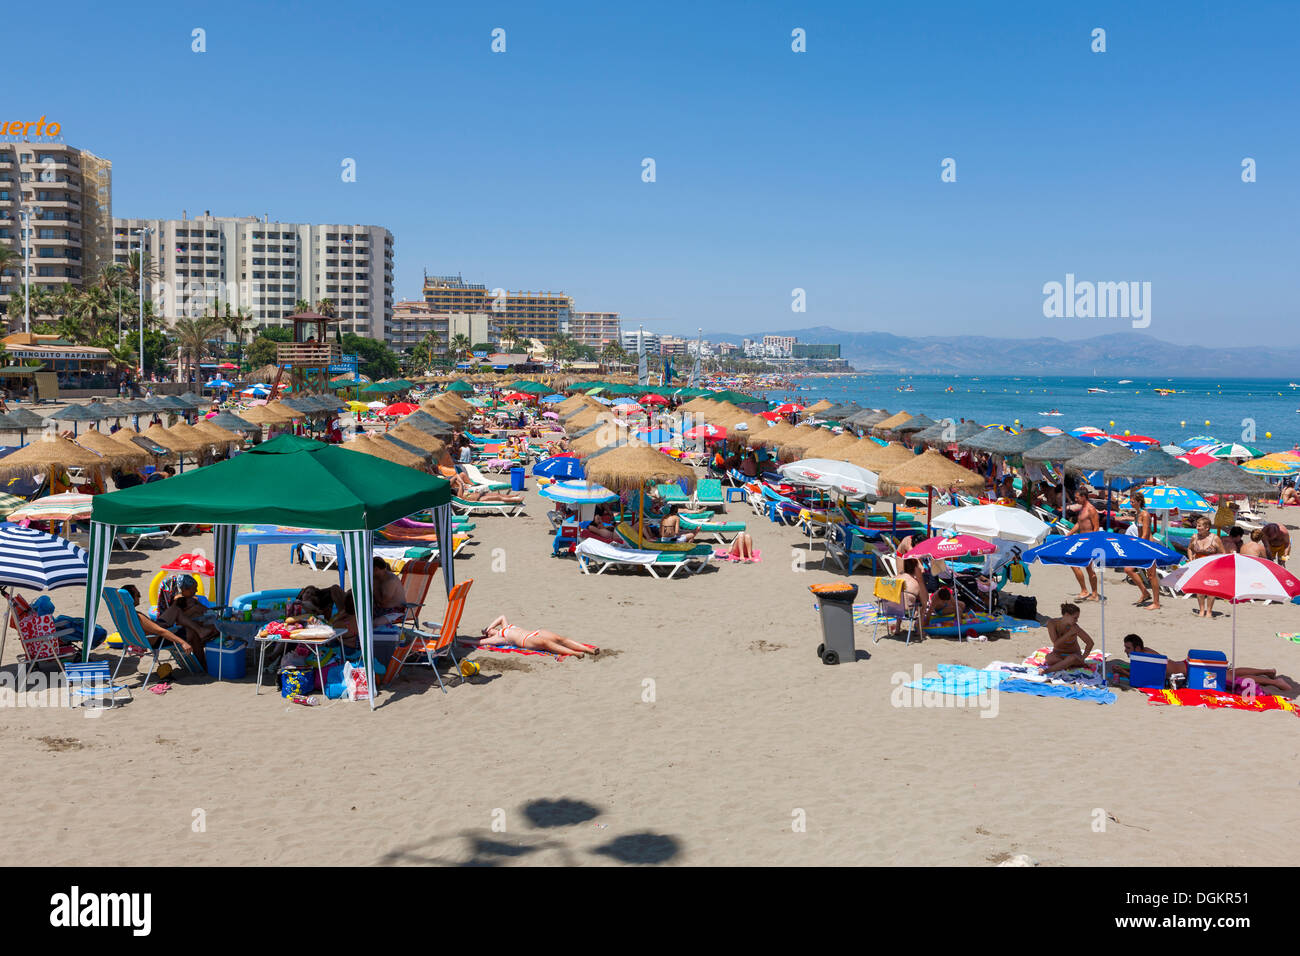 Benalmadena beach on the Costa del Sol. Stock Photo